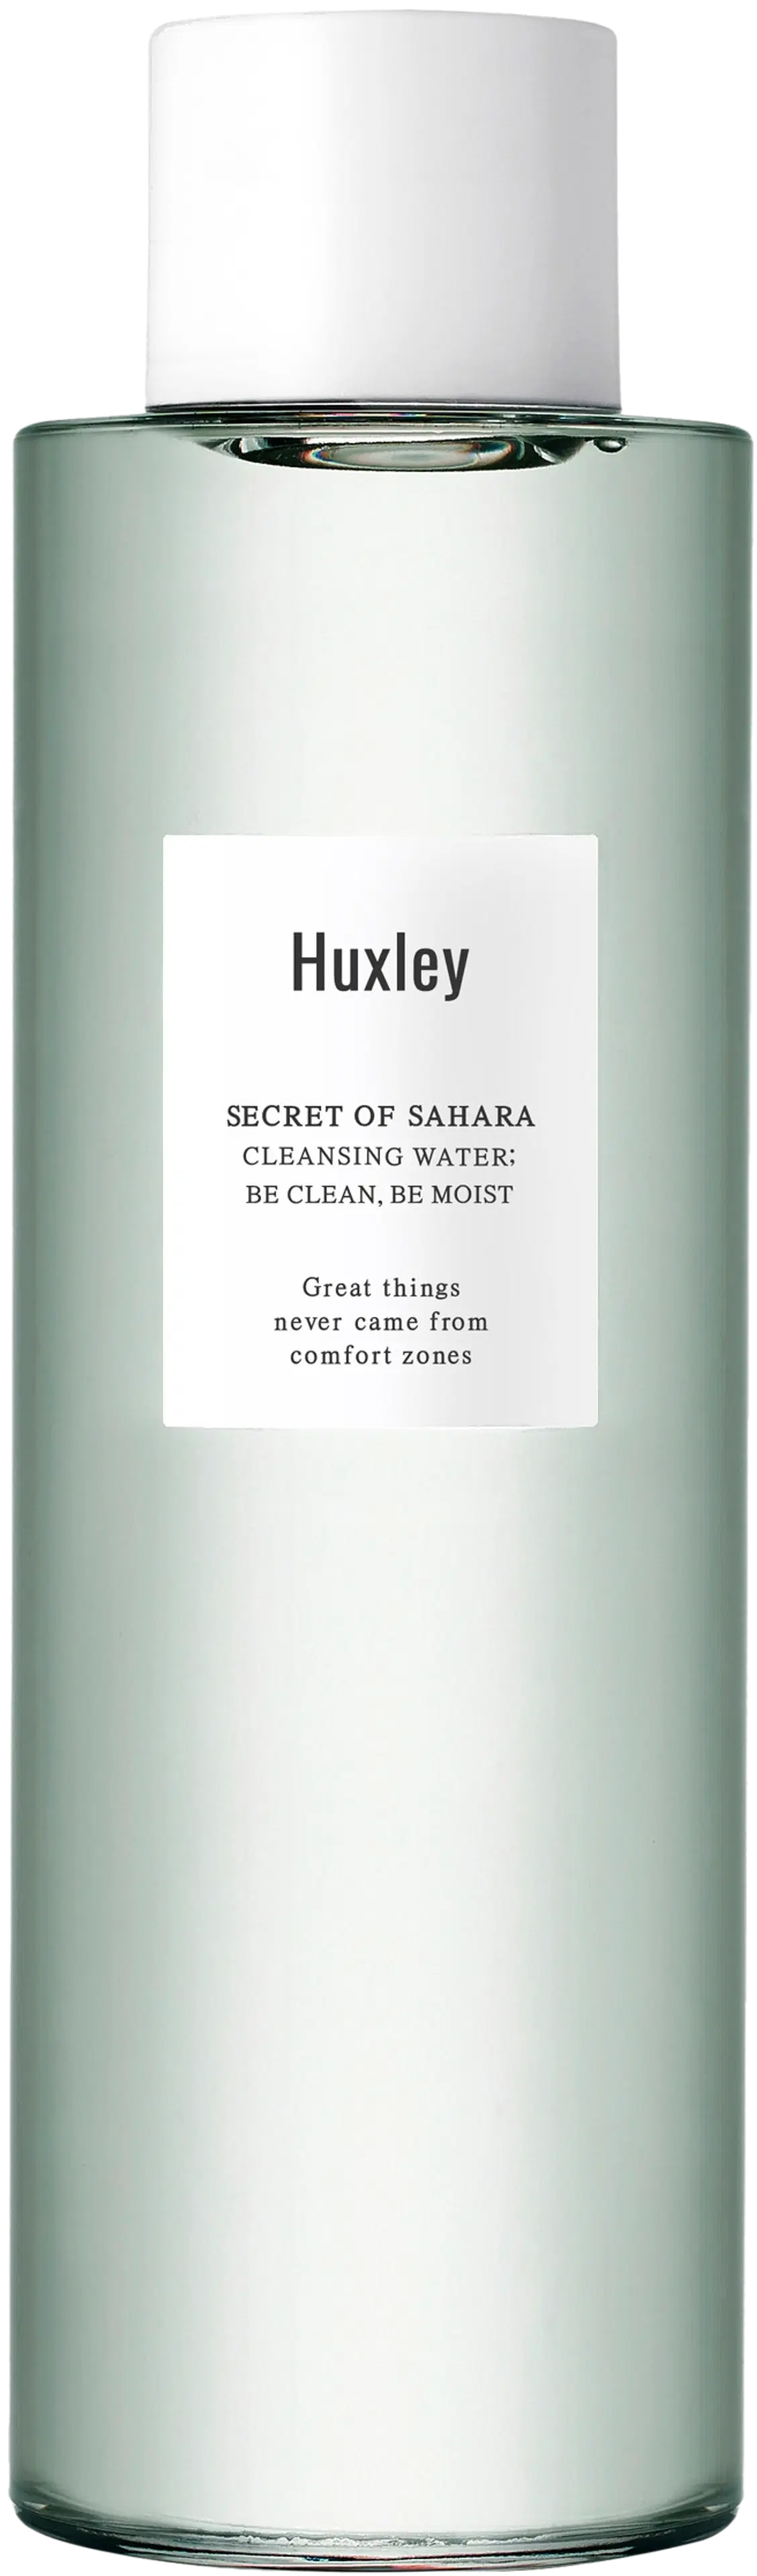 Huxley Cleansing Water; Be Clean, Be Moist puhdistusvesi 200ml